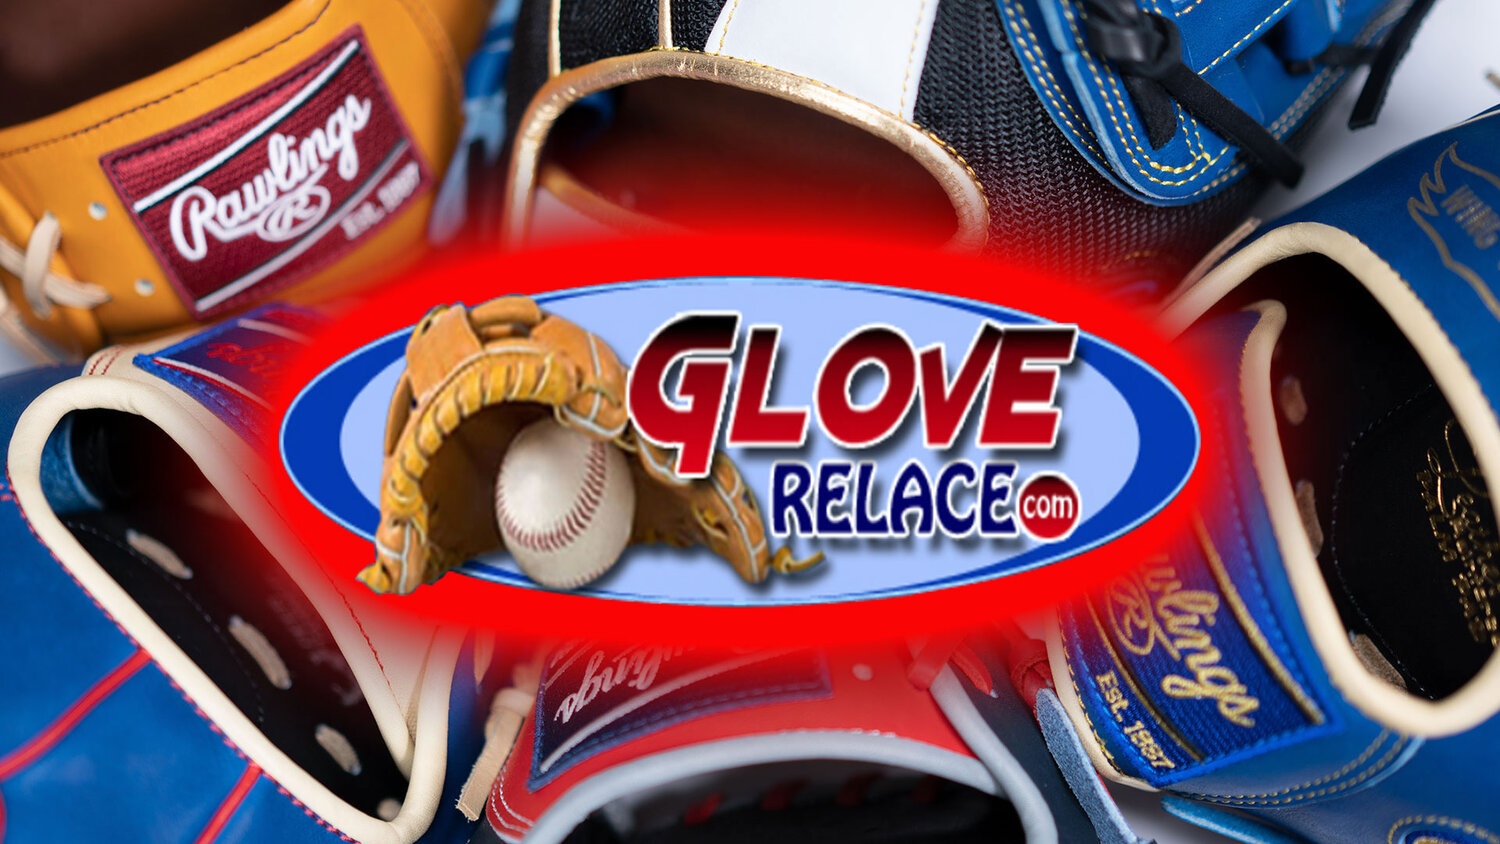 Davis Relacing - Custom Gloveworks Game Day Series relaced